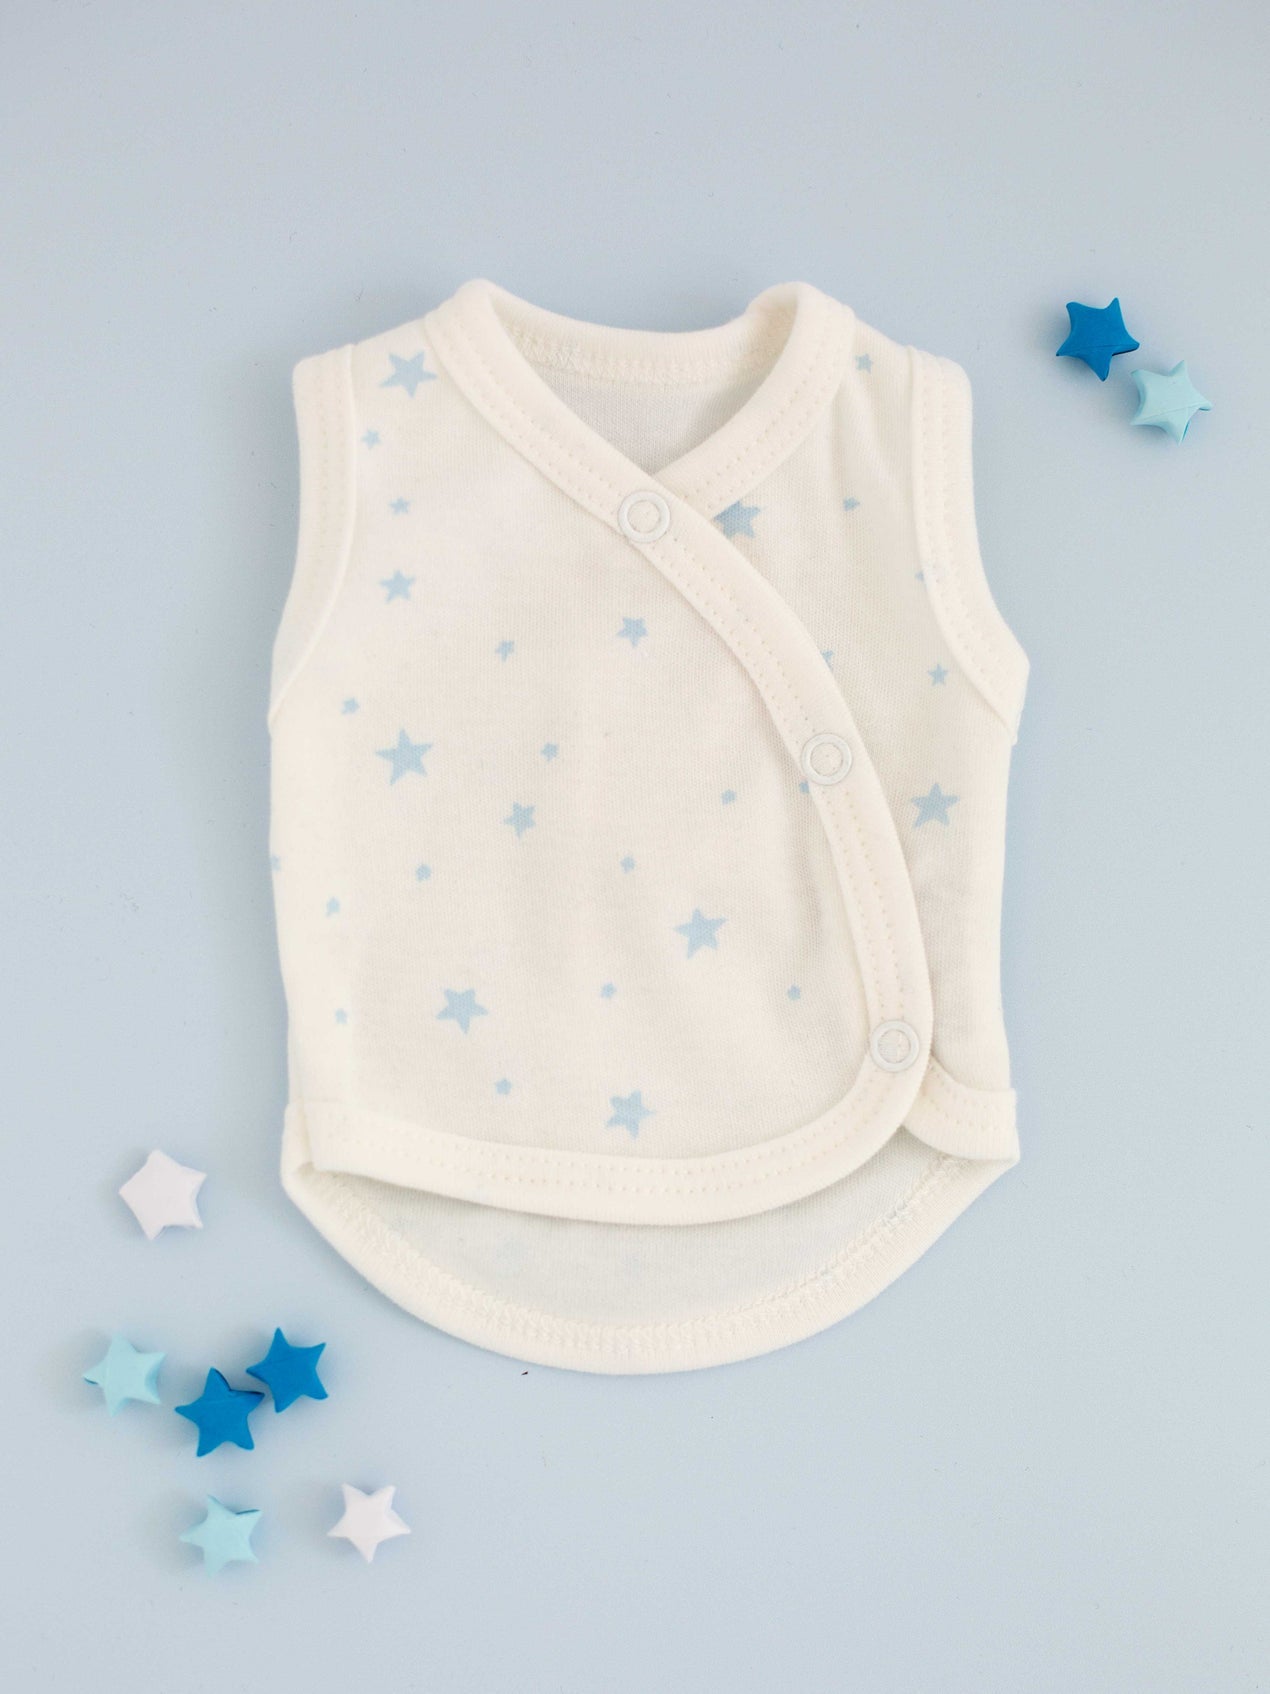 3 Pack - Star Incubator Vests - Blue, Mint & Silver Stars,  100% Organic Cotton - Set - Tiny & Small